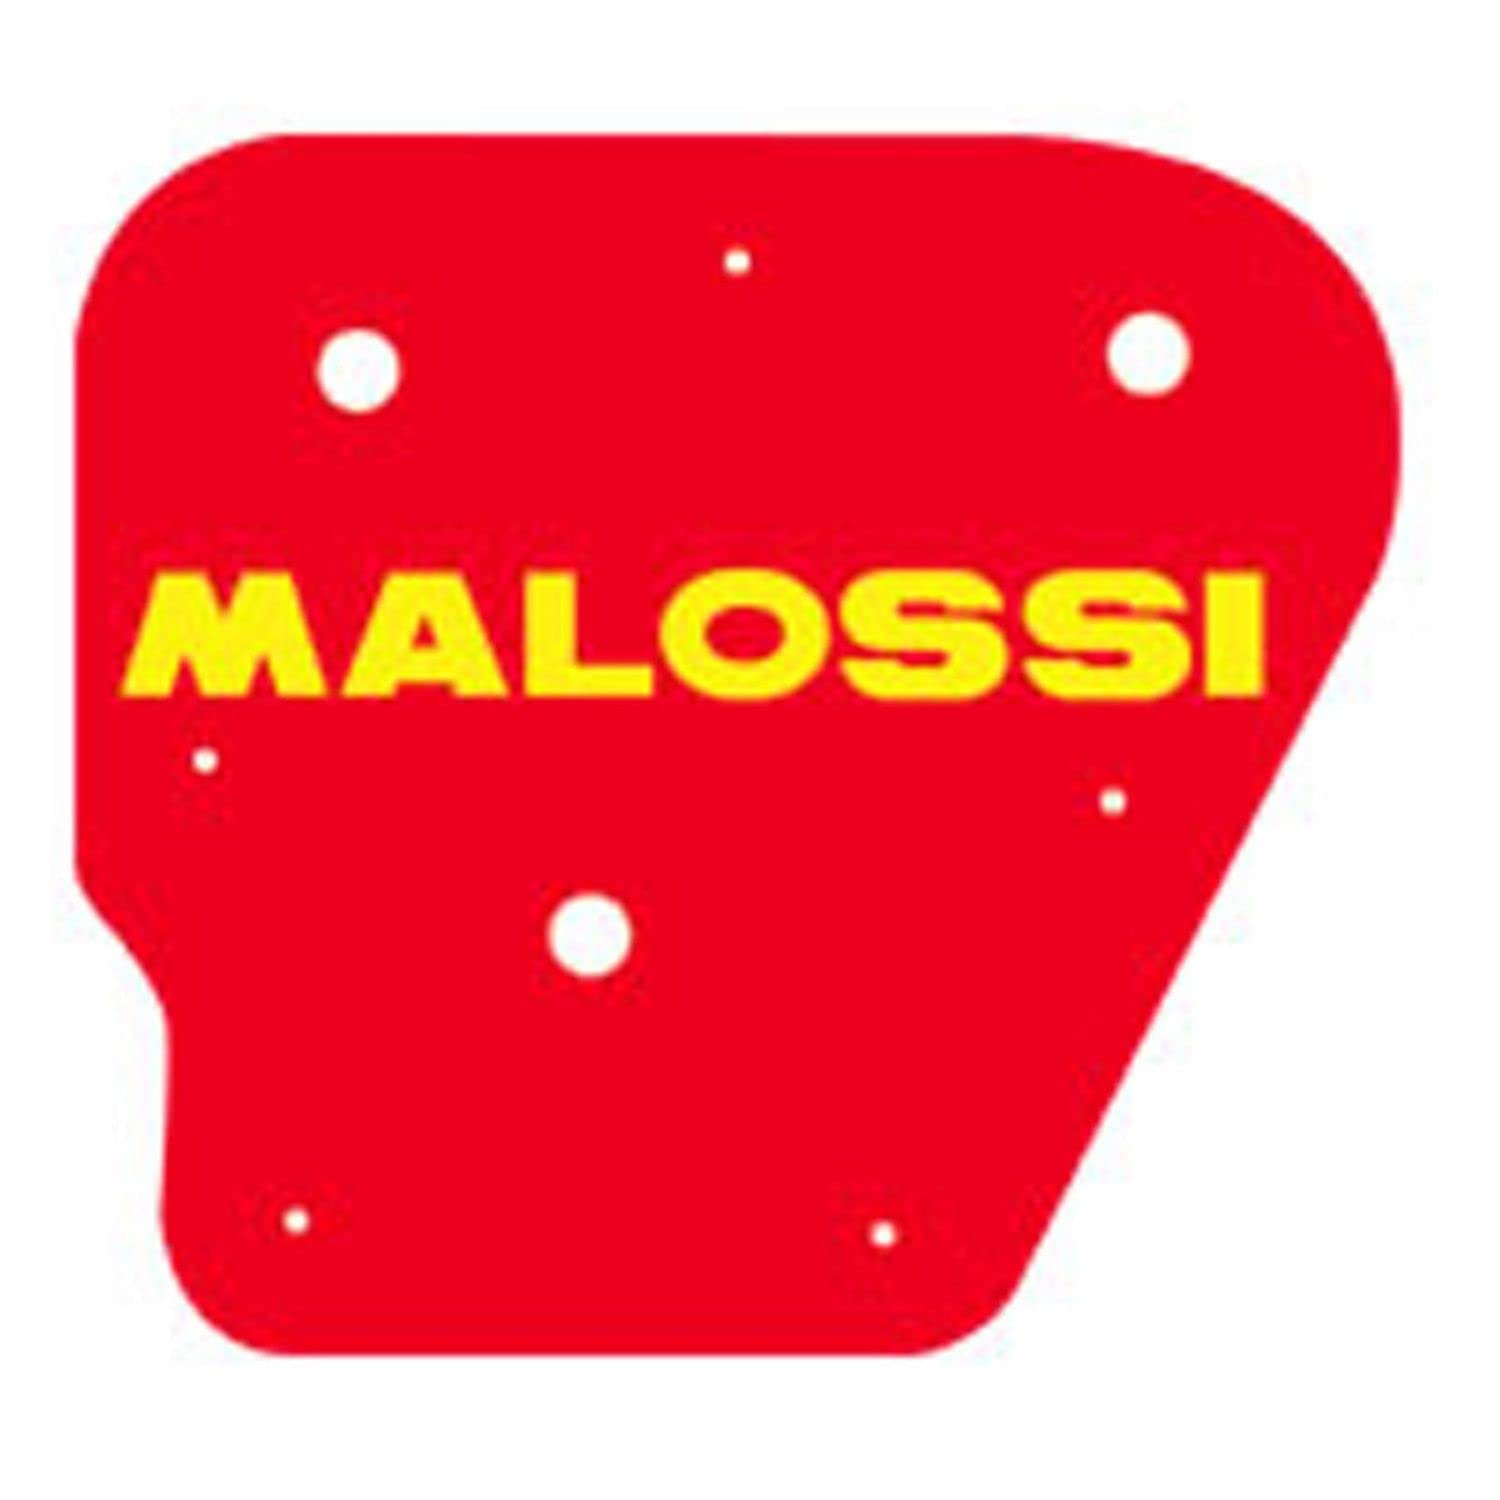 Luftfiltereinsatz MALOSSI Red Sponge - Aeon Cobra 50 von MALOSSI